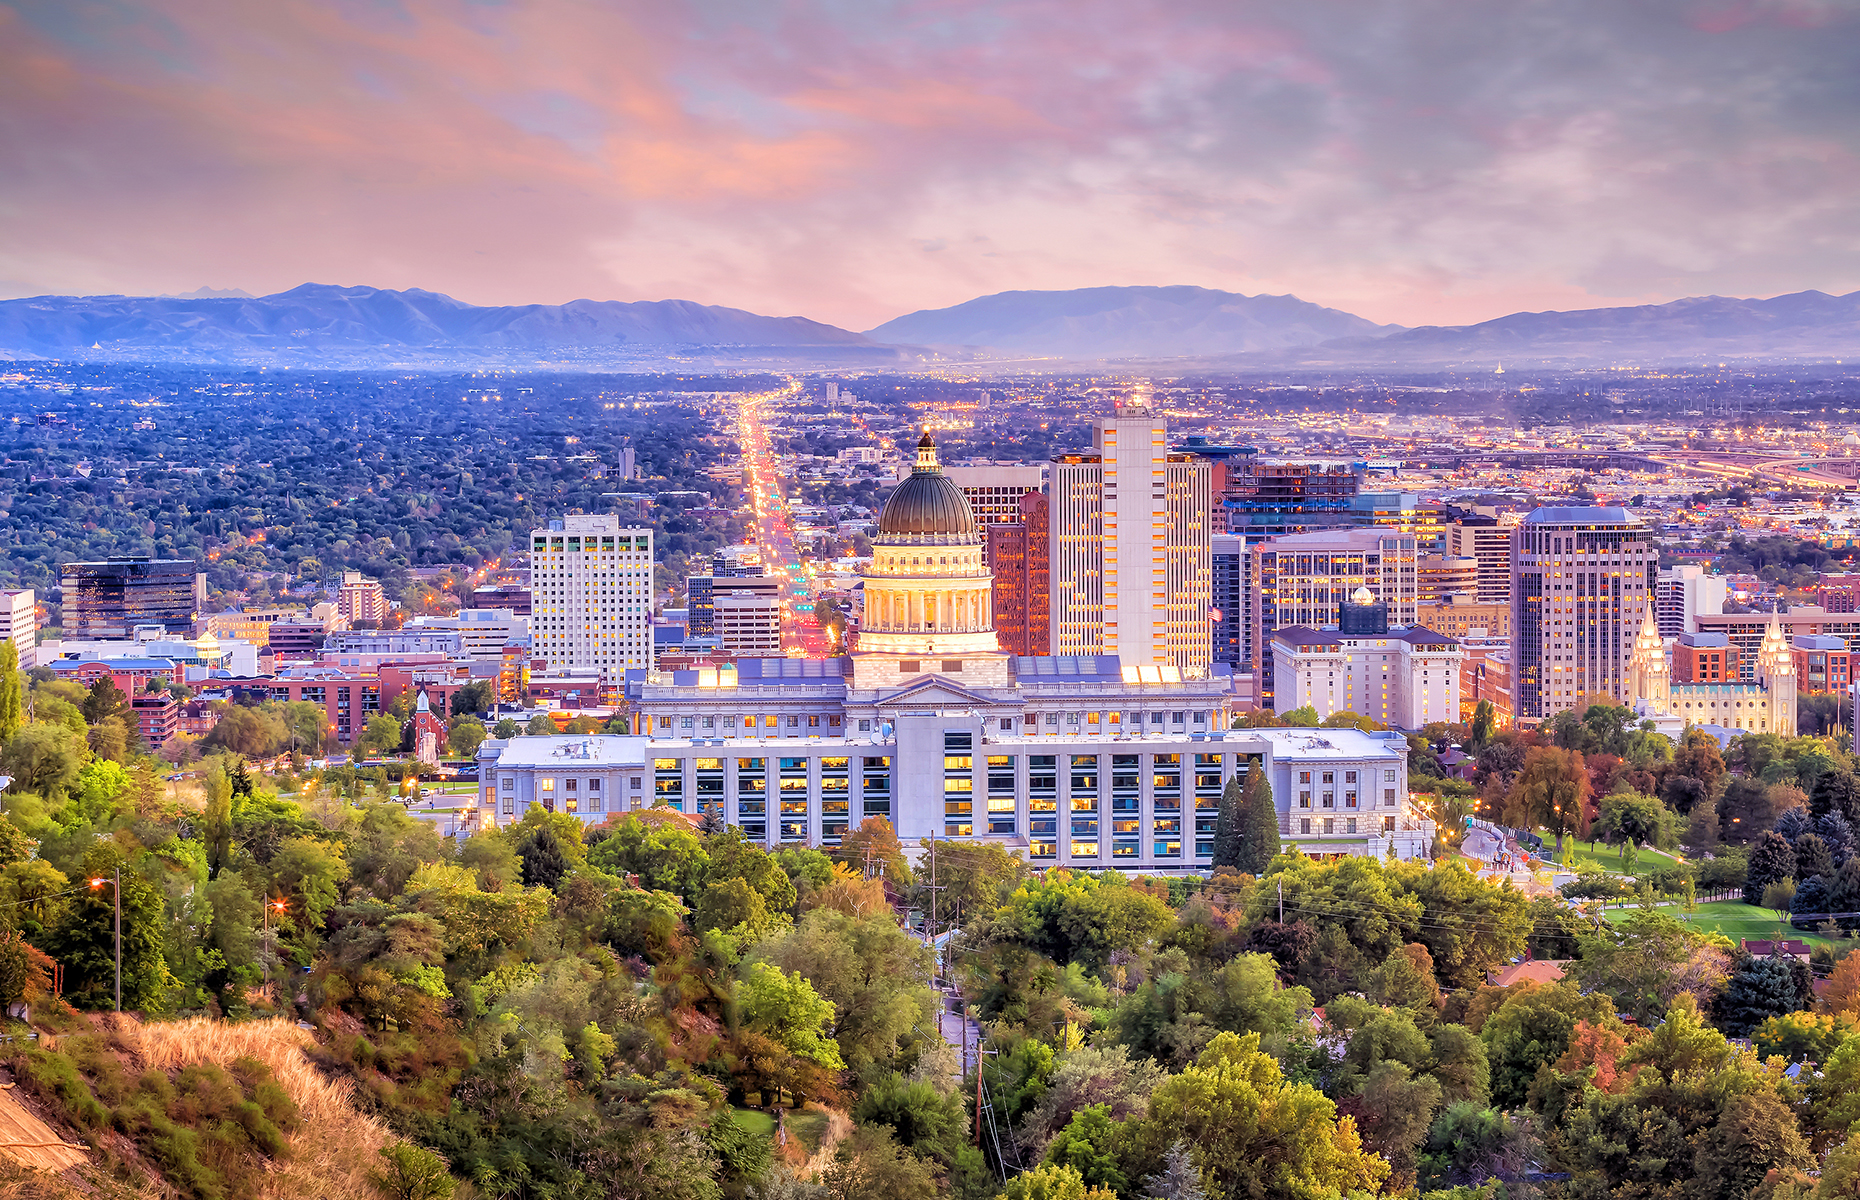 Salt Lake City, Utah. (Image: f11photo/Shutterstock)